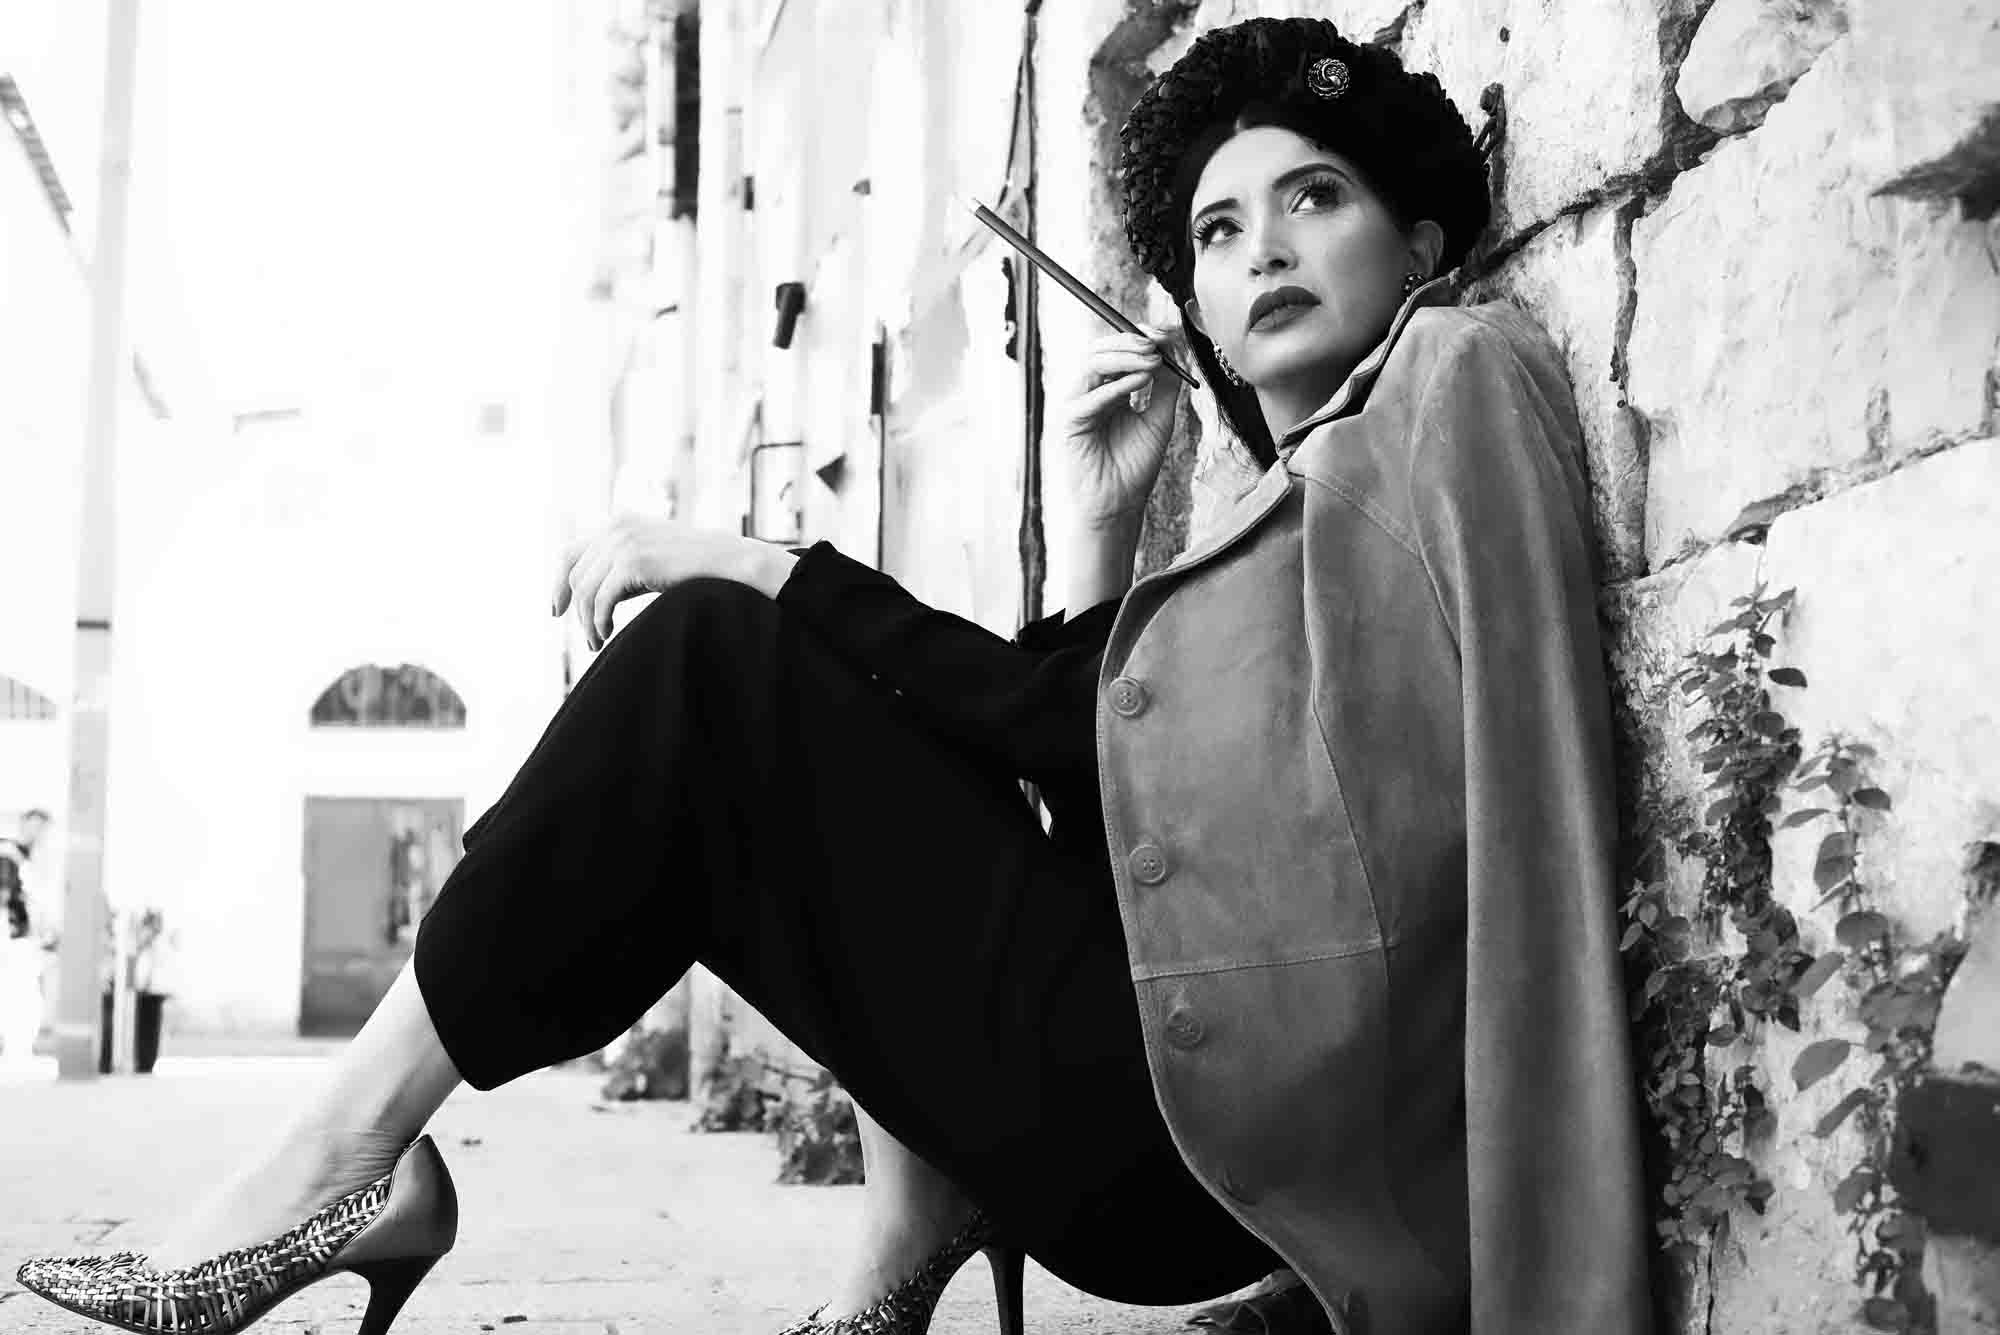  Fashion Israel - מגזין אופנה של ישראל, חליפה prada, גקט buberry - אוסף לוני וינטג. מאיה אושרי כהן. צילום: Kim Kandler